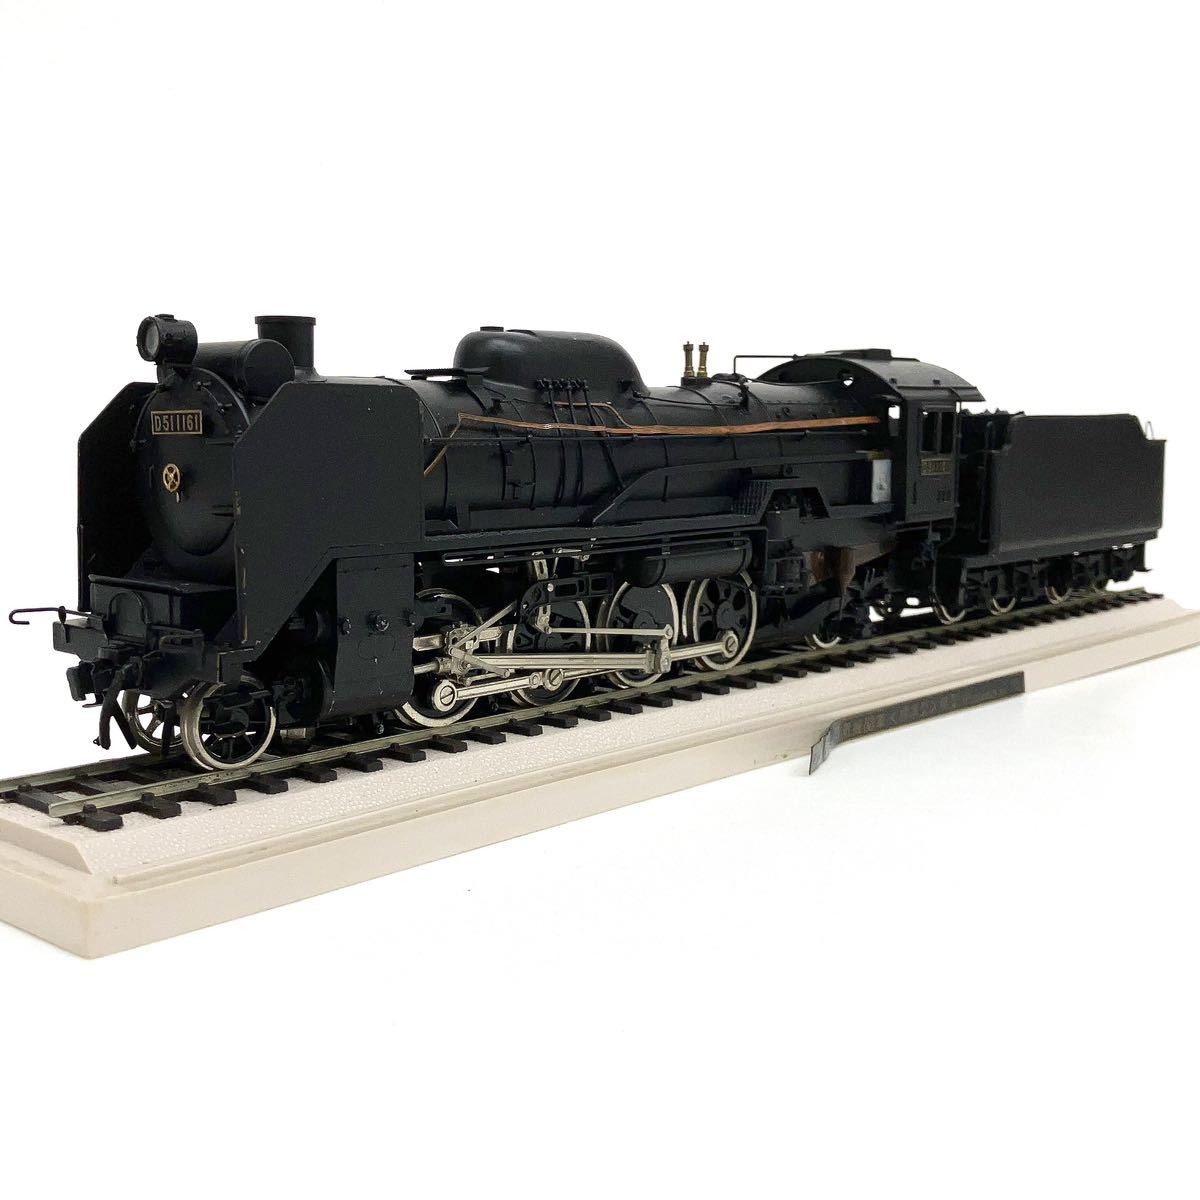 ヤフオク! -「d51蒸気機関車模型」の落札相場・落札価格